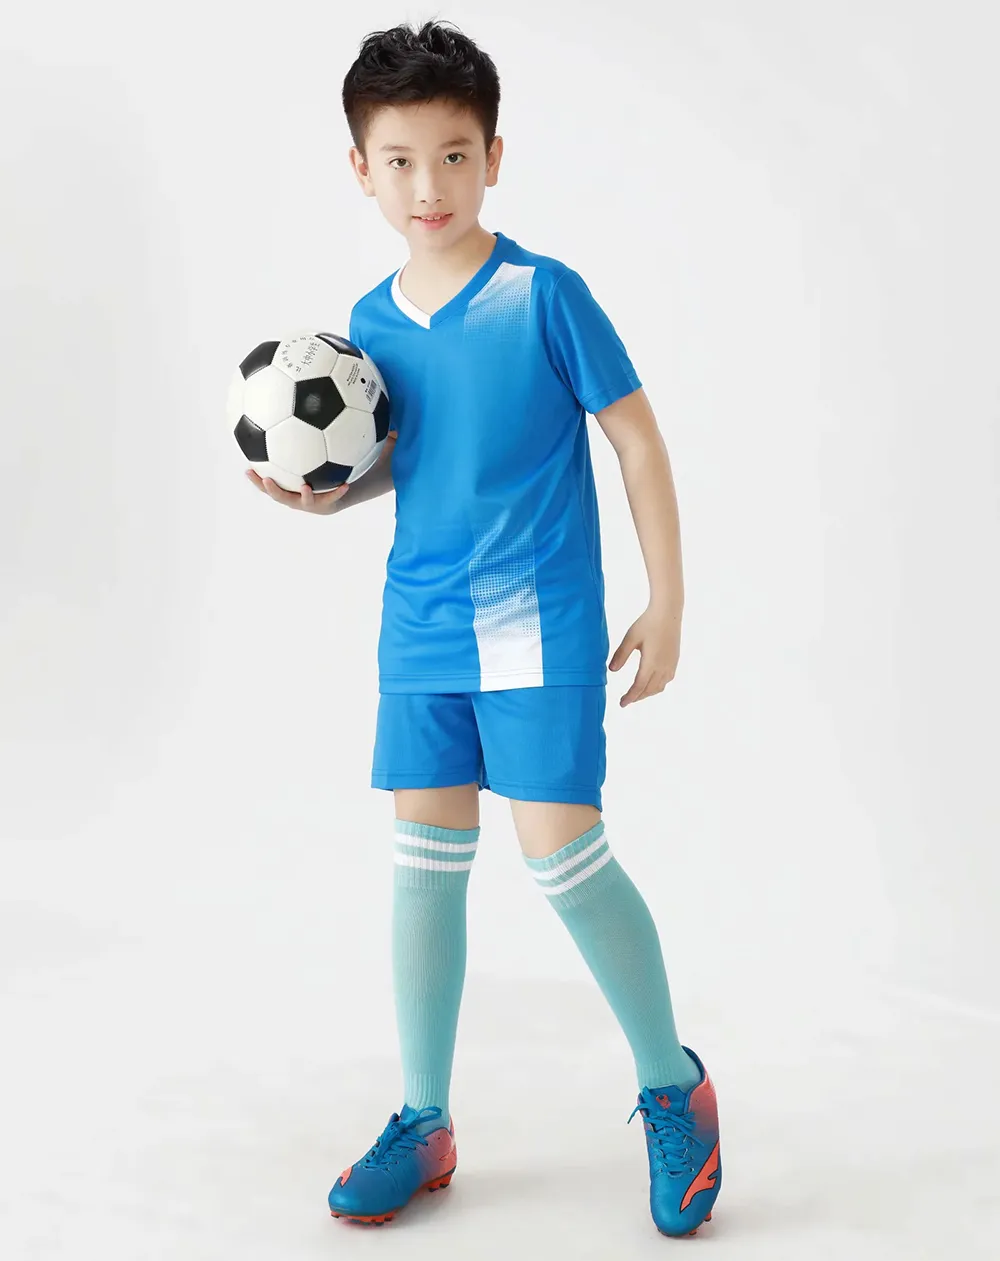 Jessie_kicks #G461 LJR aiir joordan 5 디자인 2021 패션 유니폼 아동 의류 Ourtdoor 스포츠